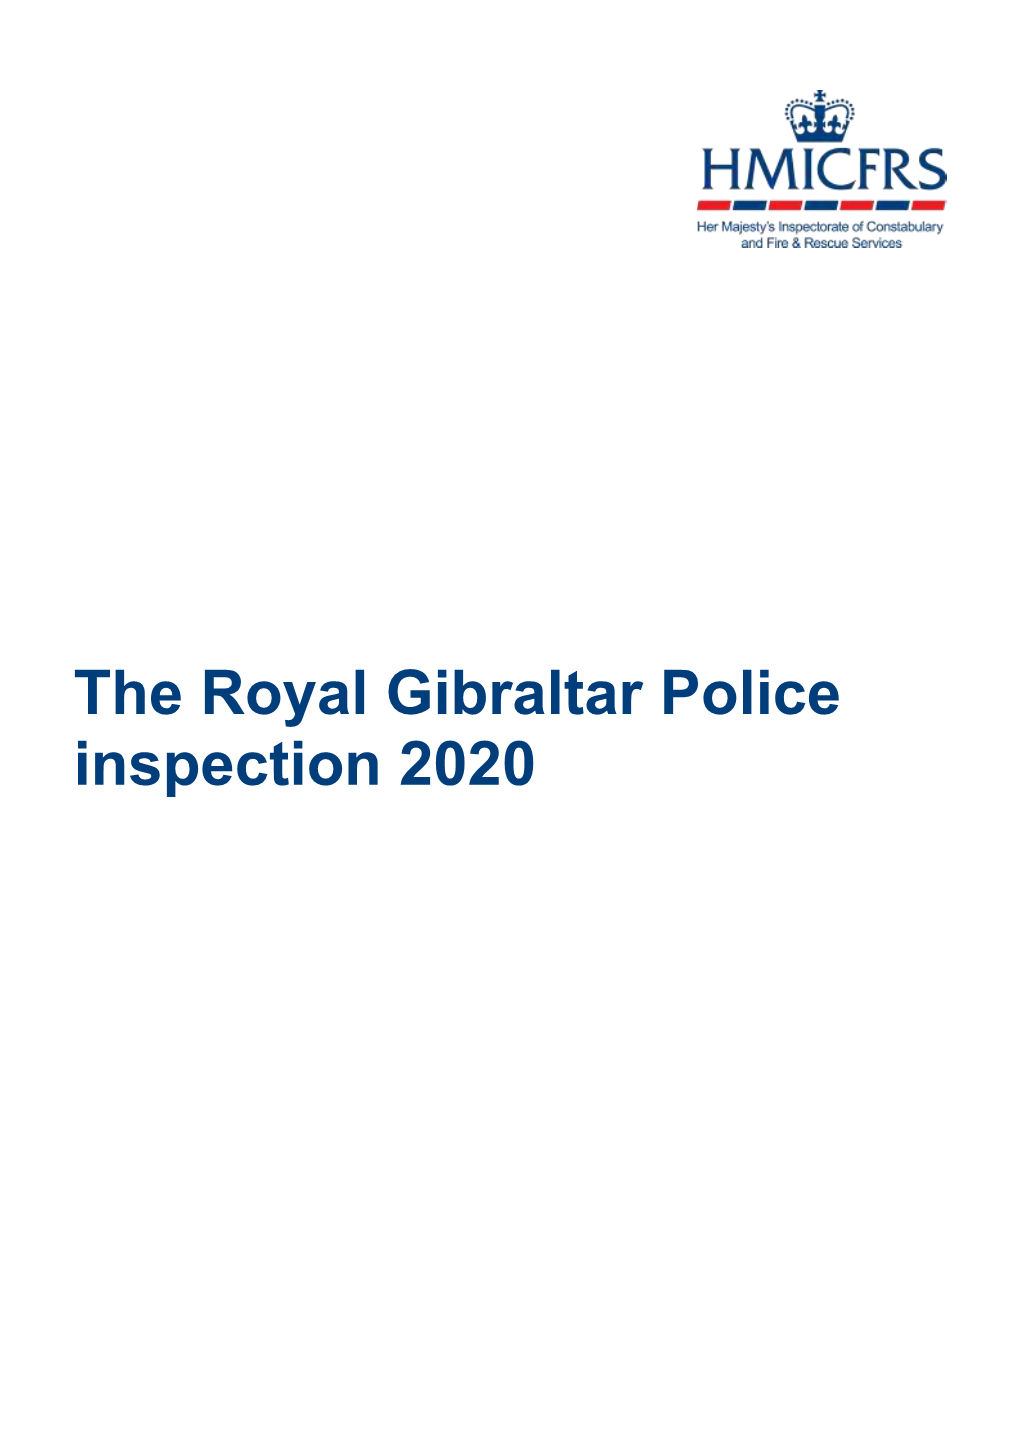 The Royal Gibraltar Police Inspection 2020